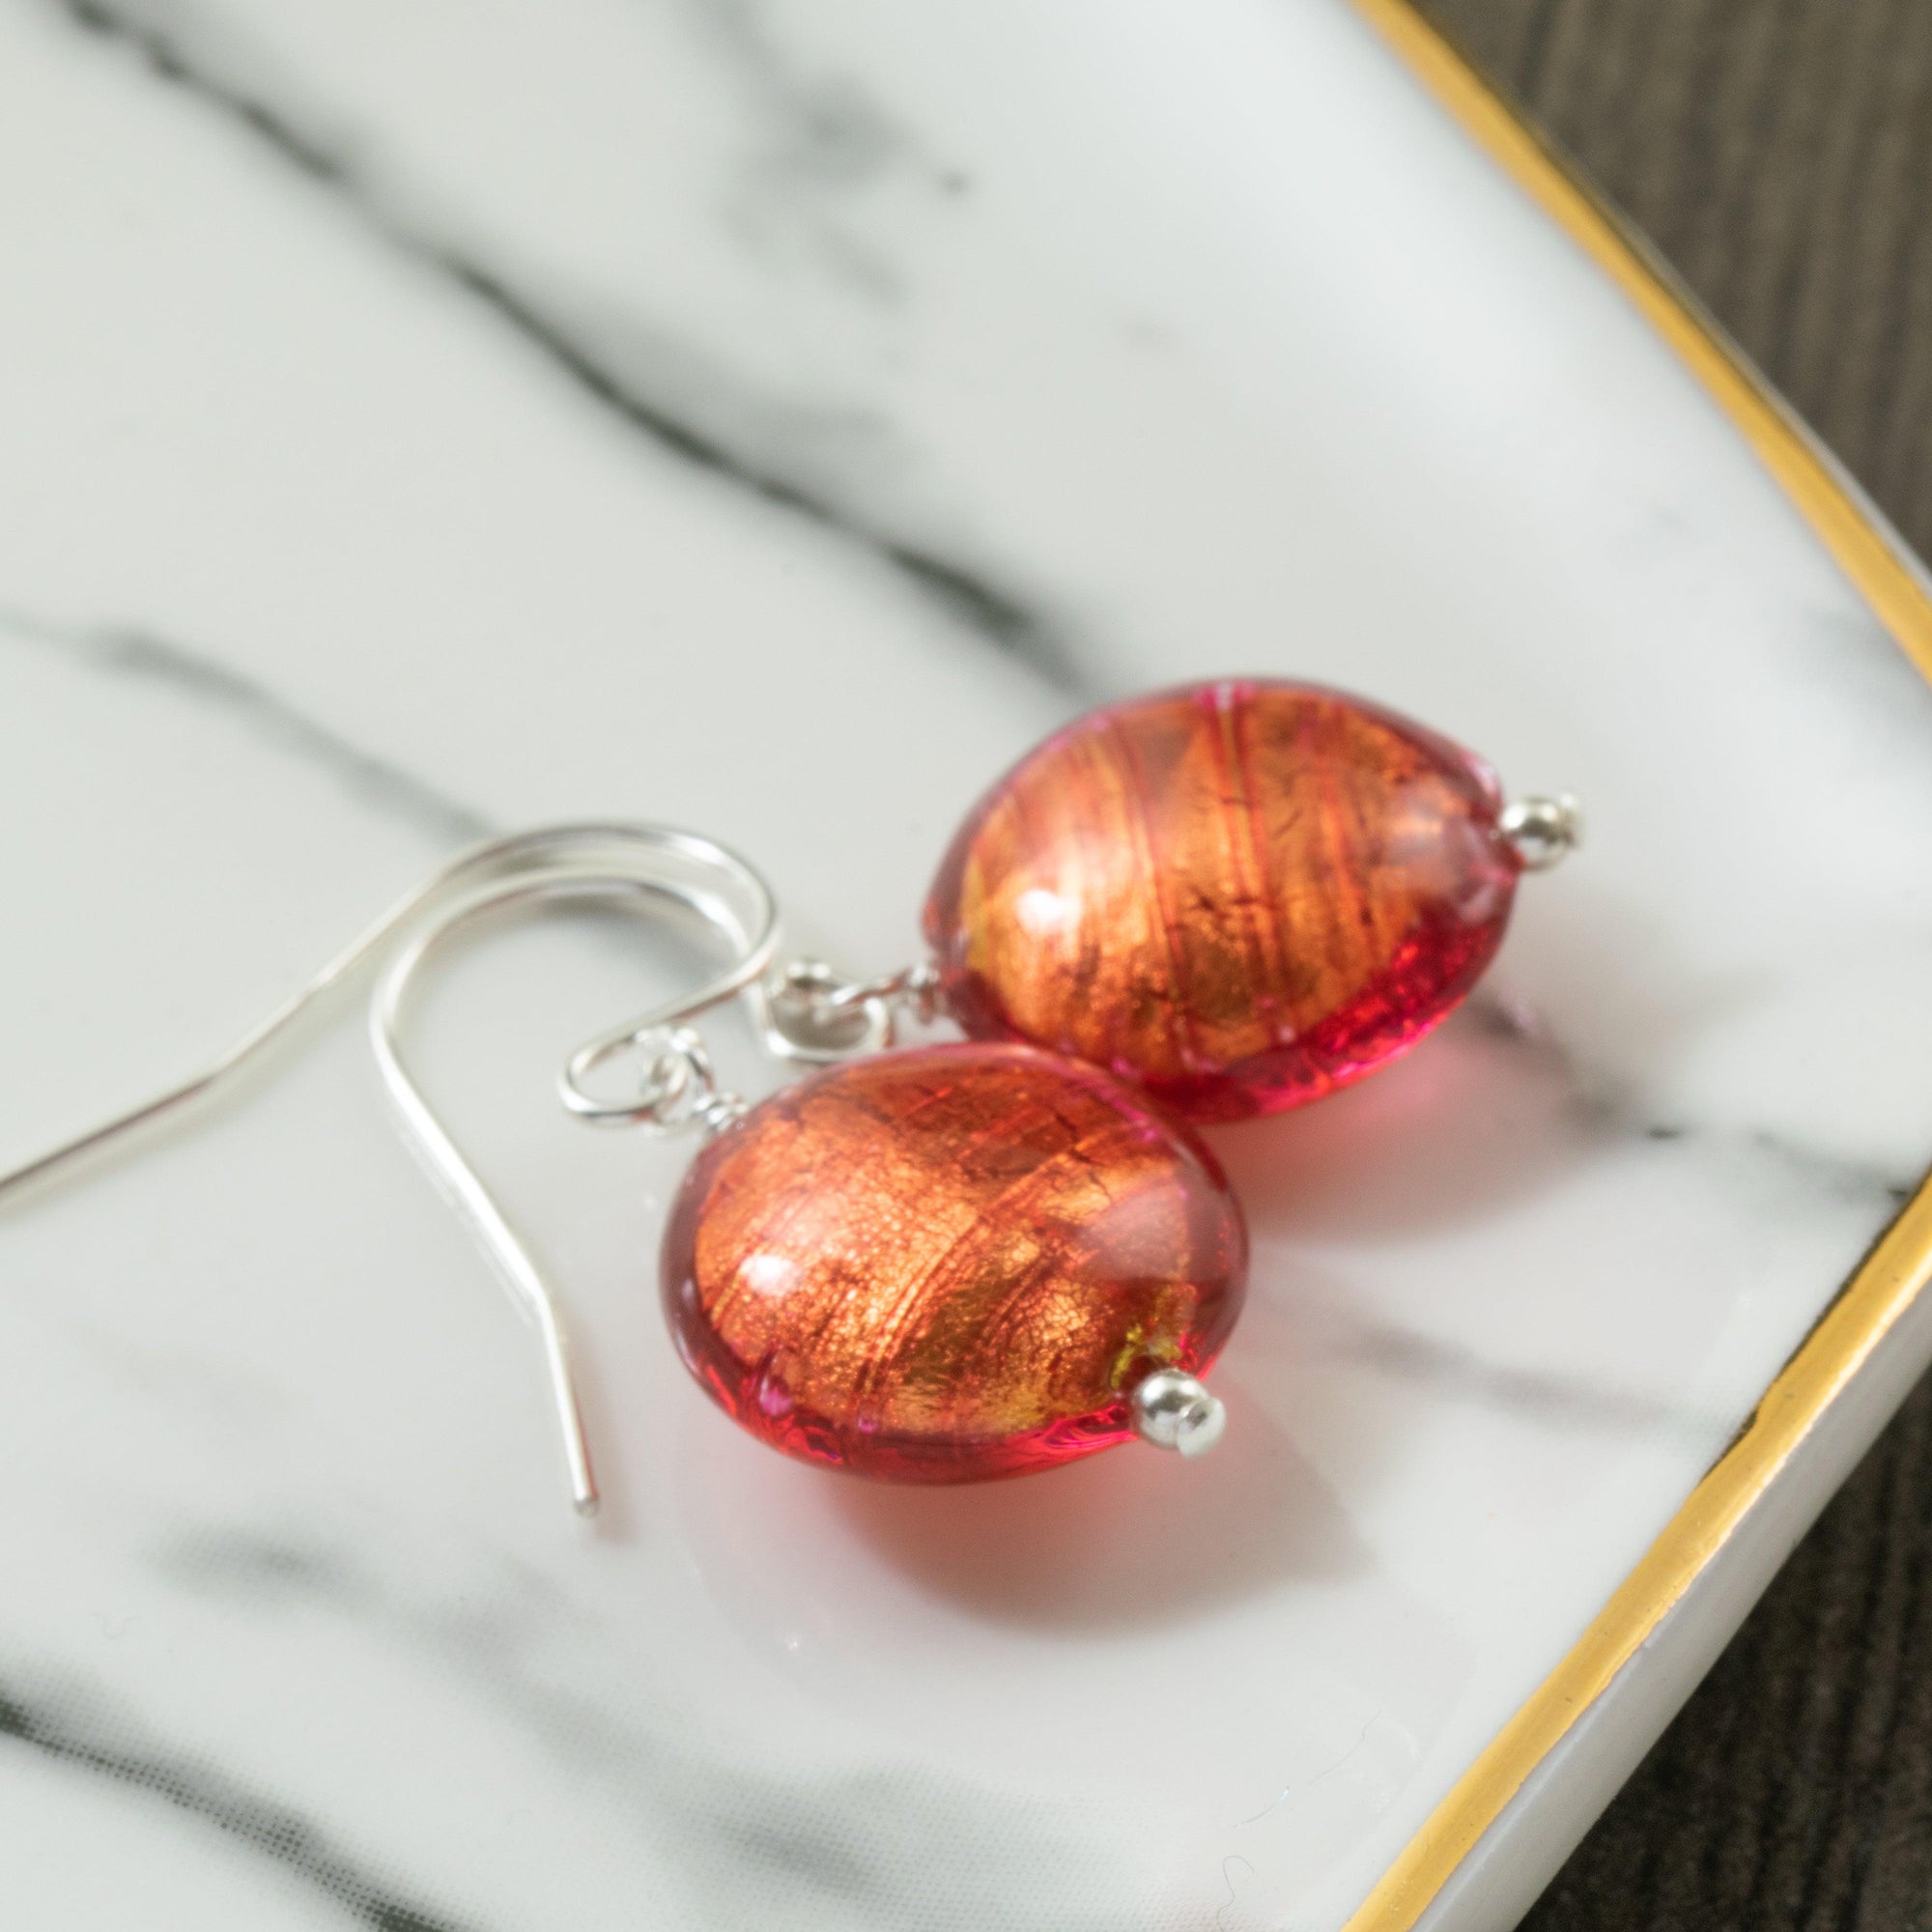 Rustic orange red Murano glass earrings